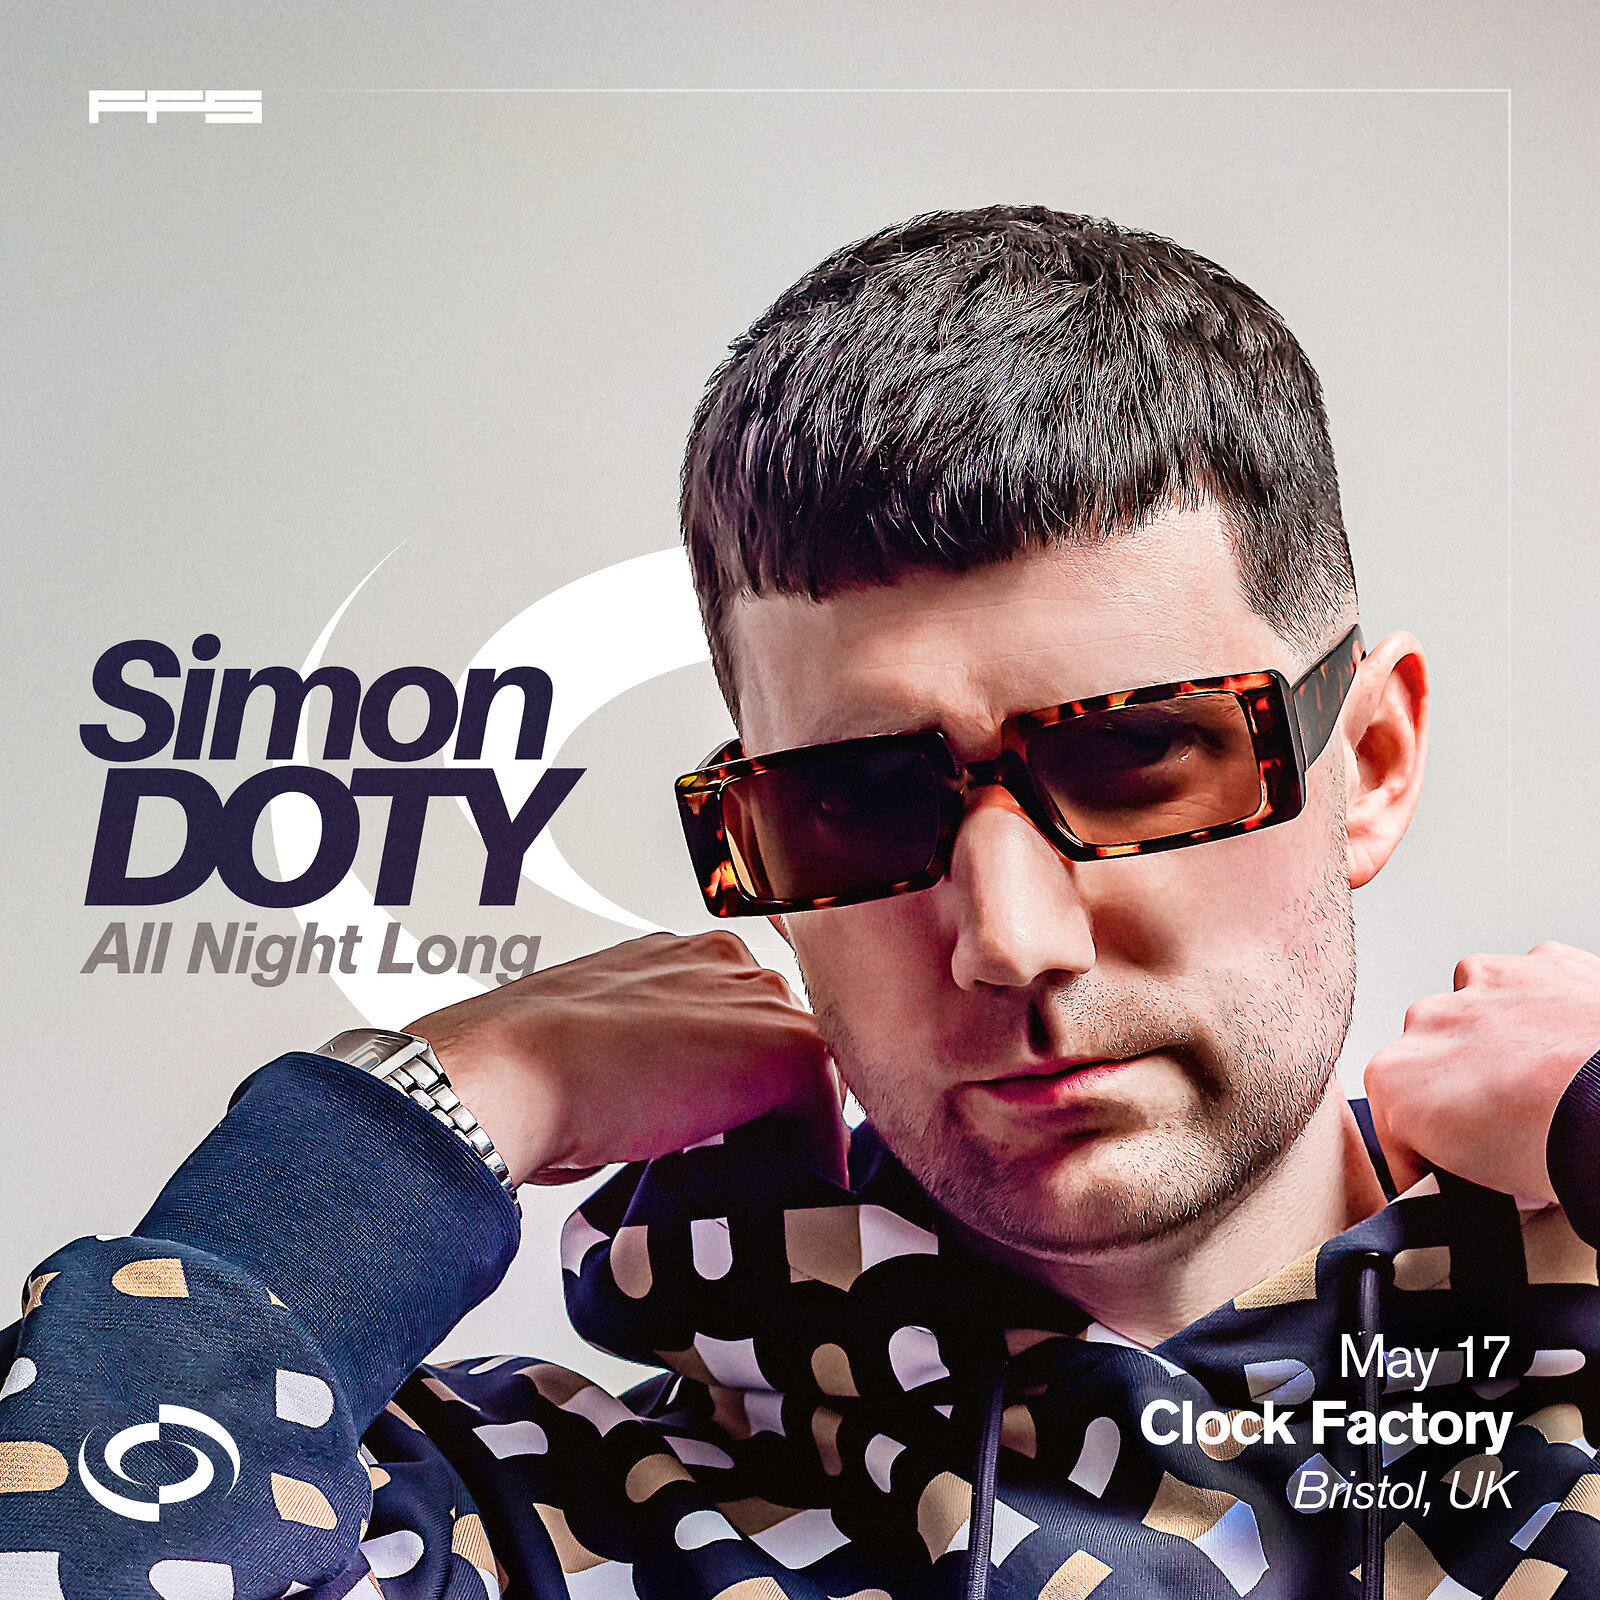 Simon Doty: All Night Long at Clock Factory